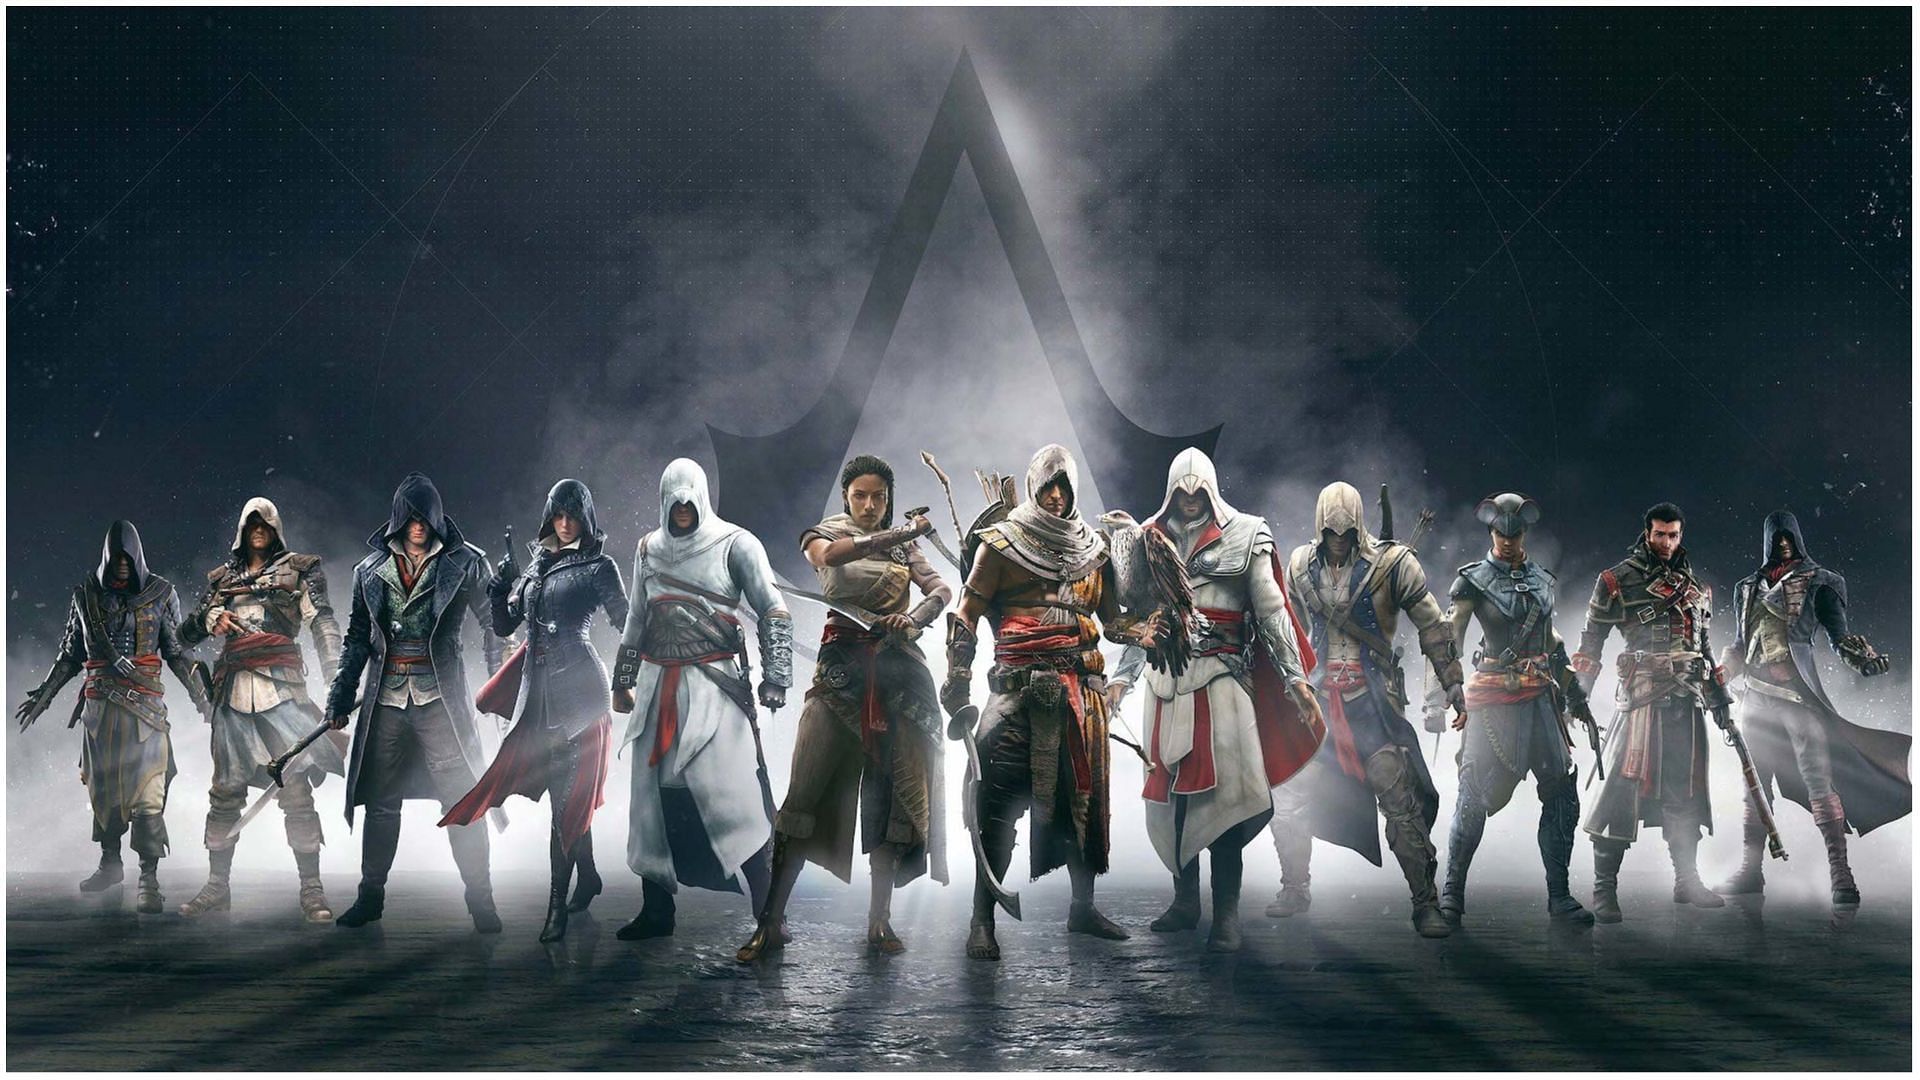 Assassin&#039;s Creed is one of Ubisoft&#039;s most iconic franchises (Image via Ubisoft)